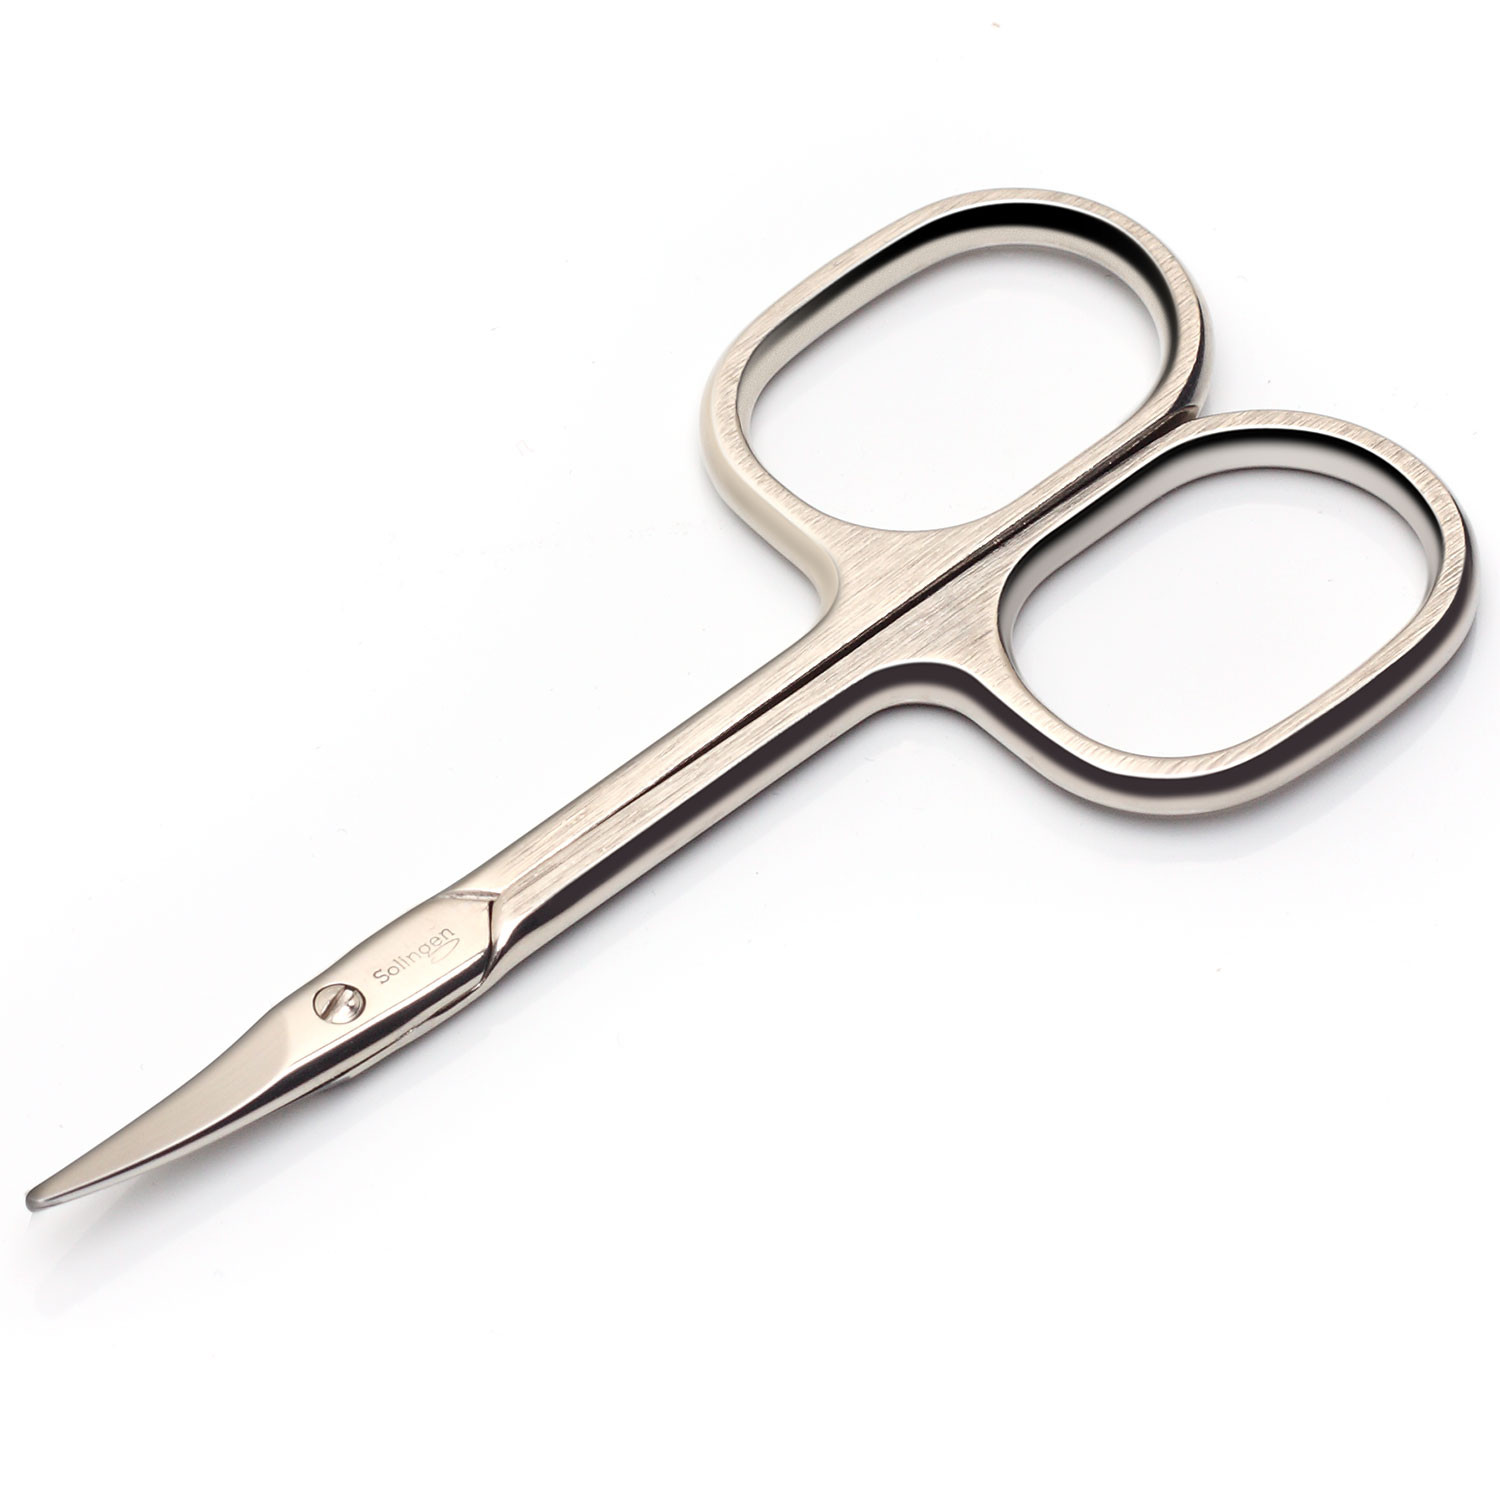 Reer - Solingen nail scissors for babies and infants (83)